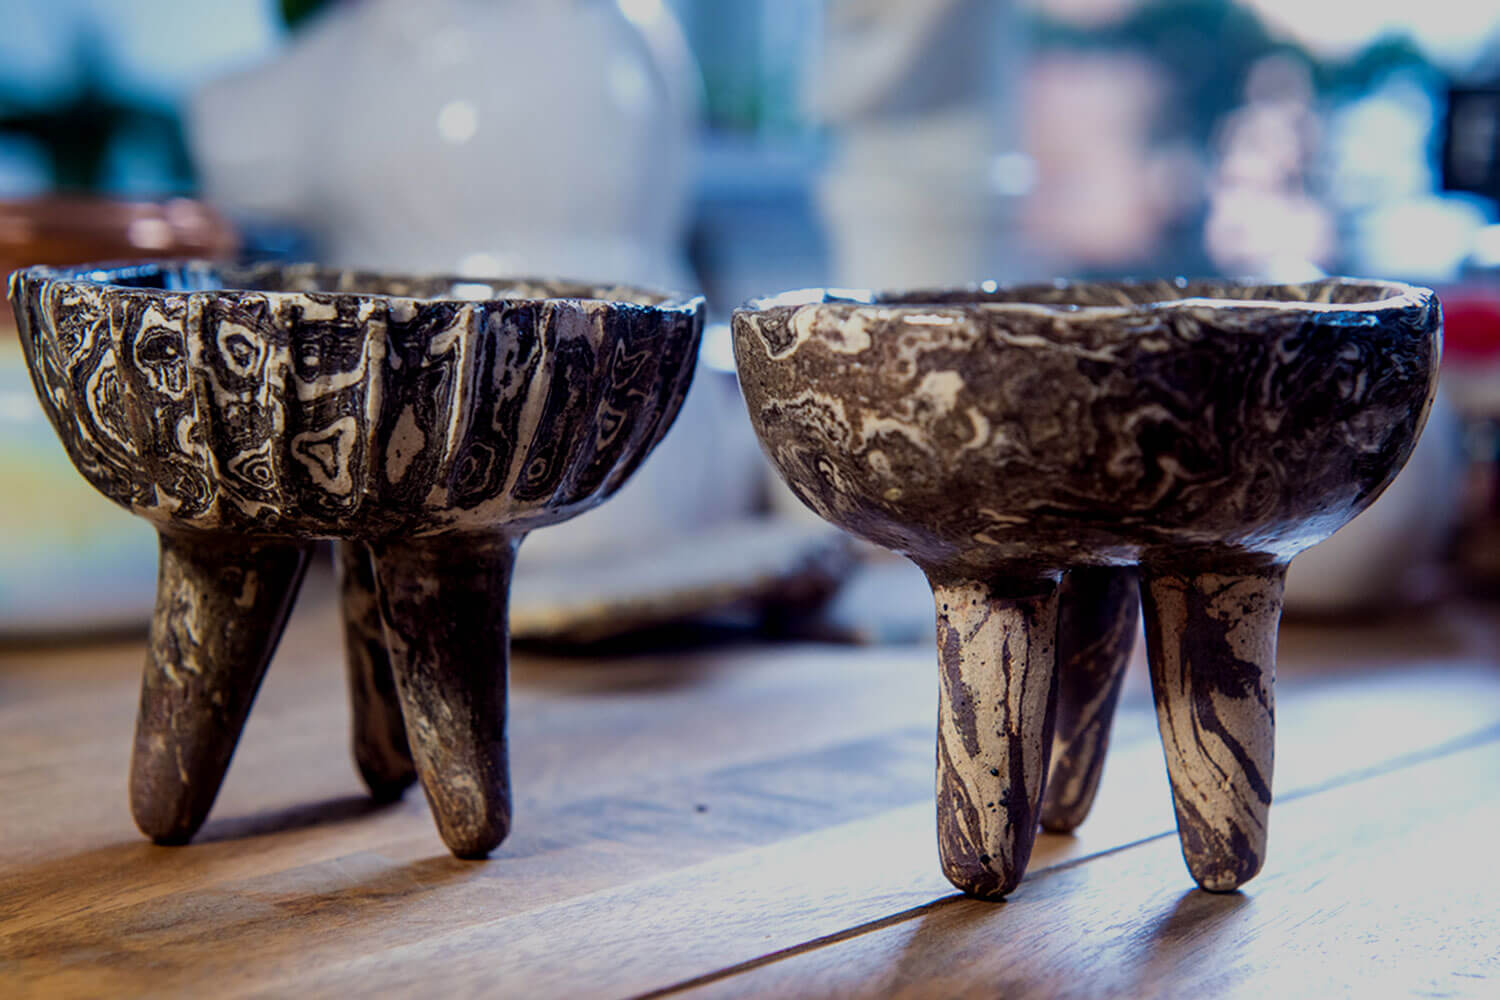 Two decorative ceramic bowls, each balanced on three legs